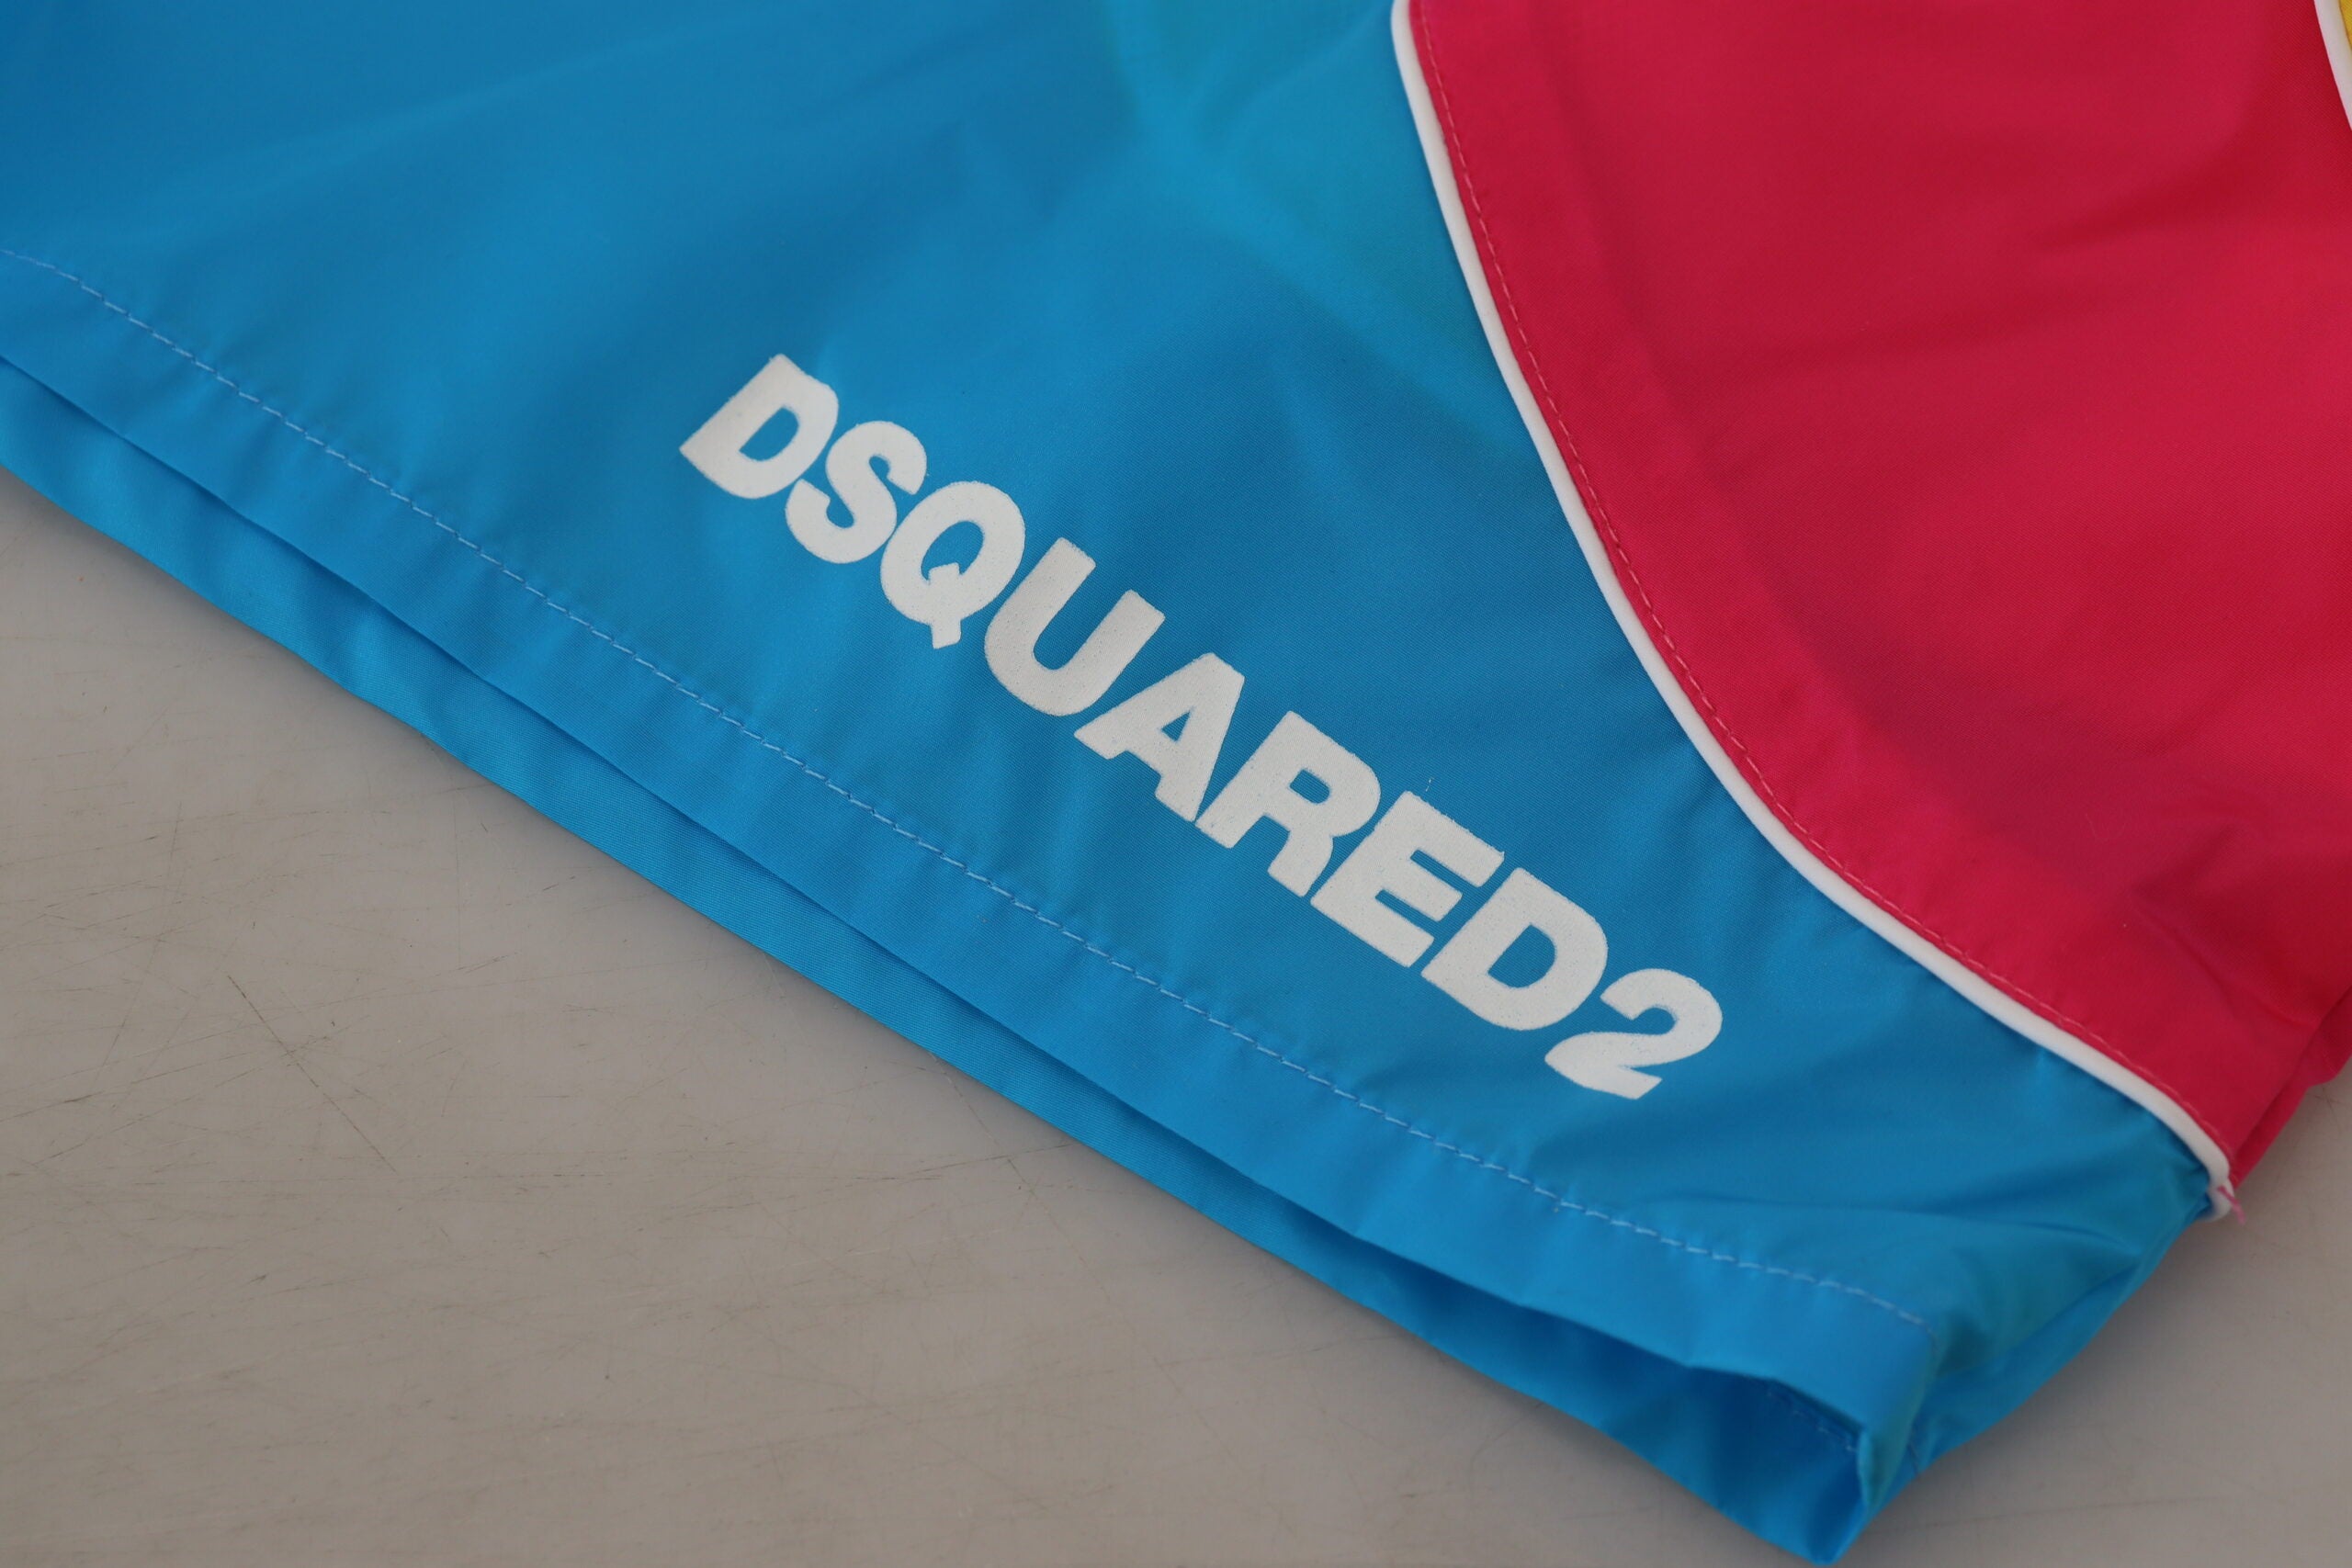 Dsquared² Exclusive Multicolor Swim Shorts Boxer